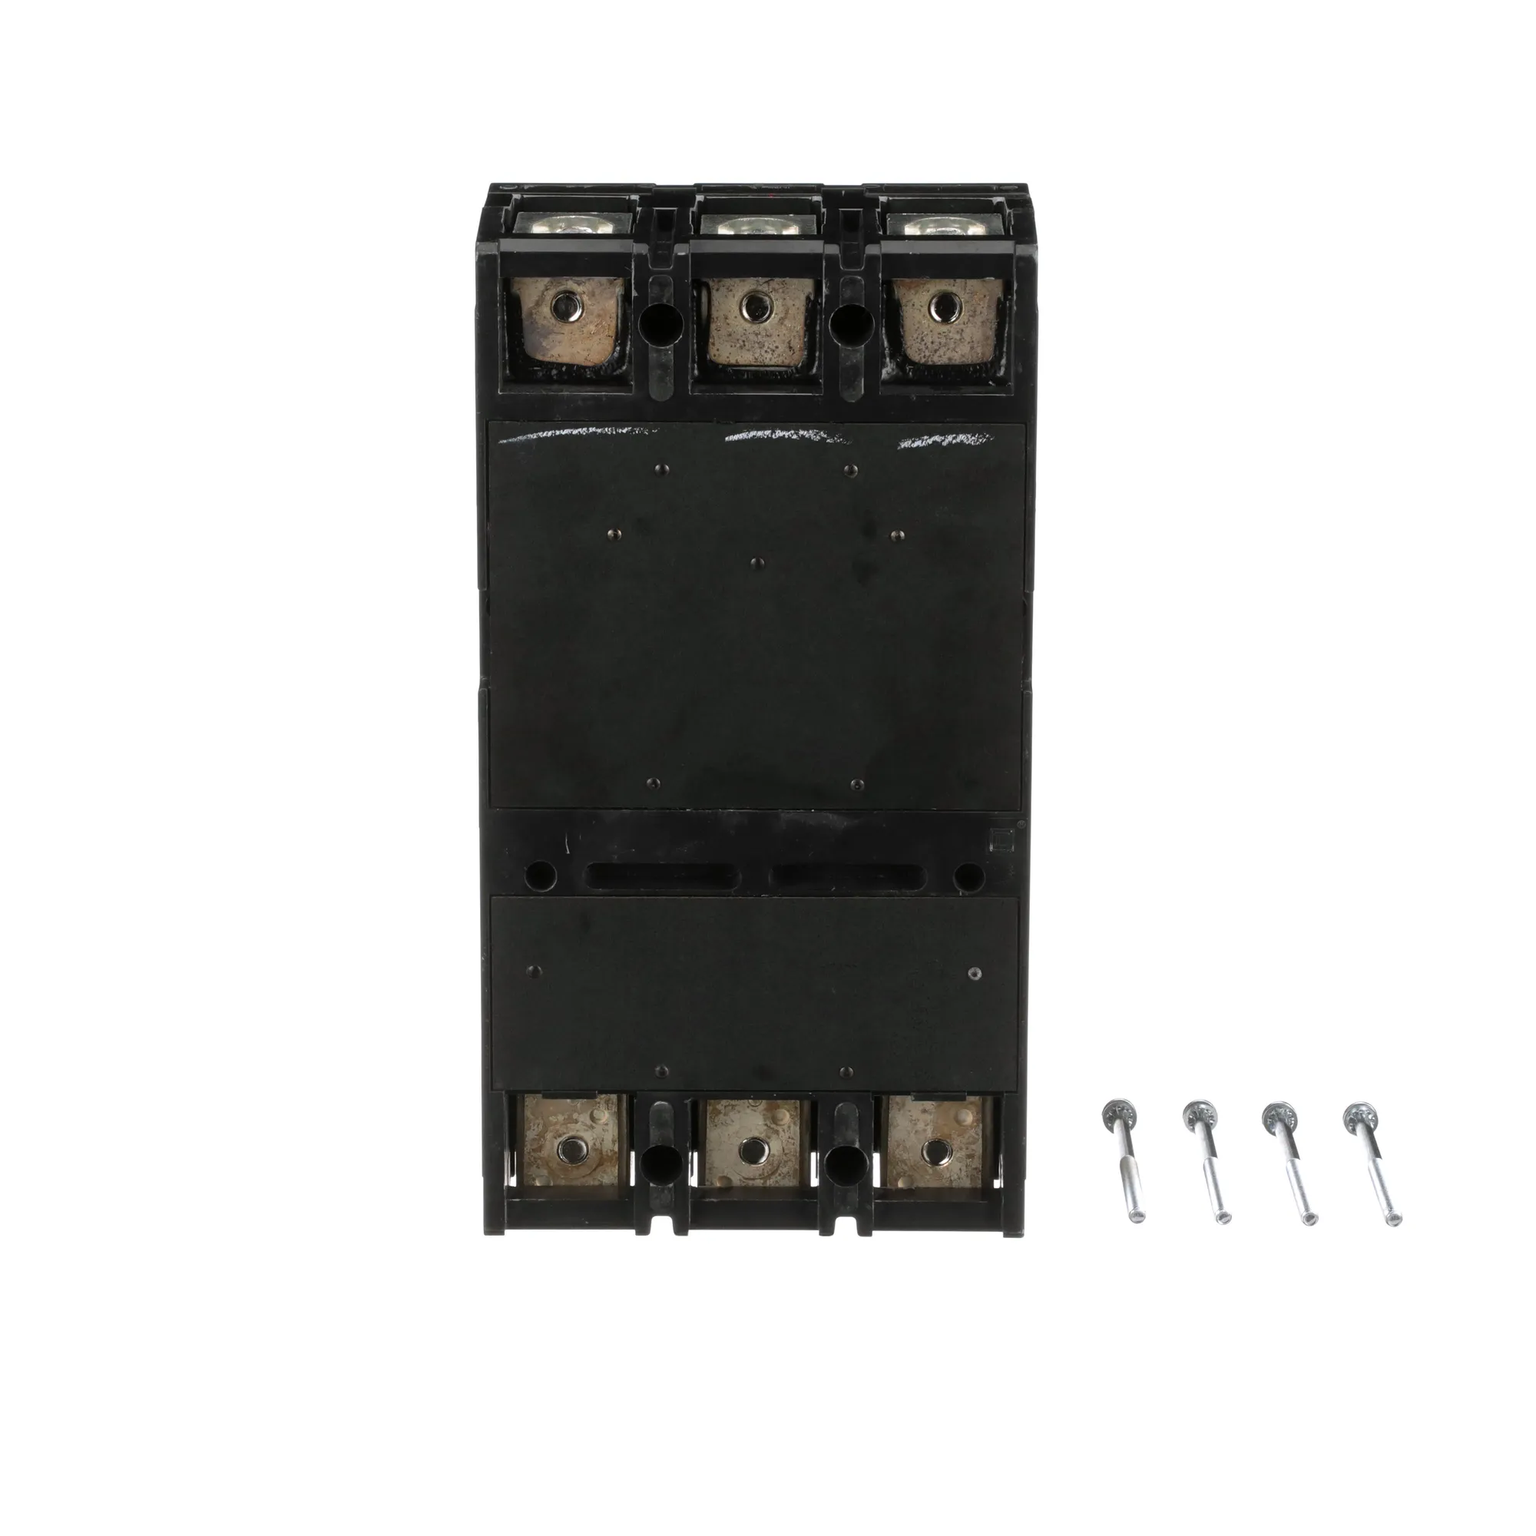 LAL36350 - Square D - Molded Case Circuit Breaker